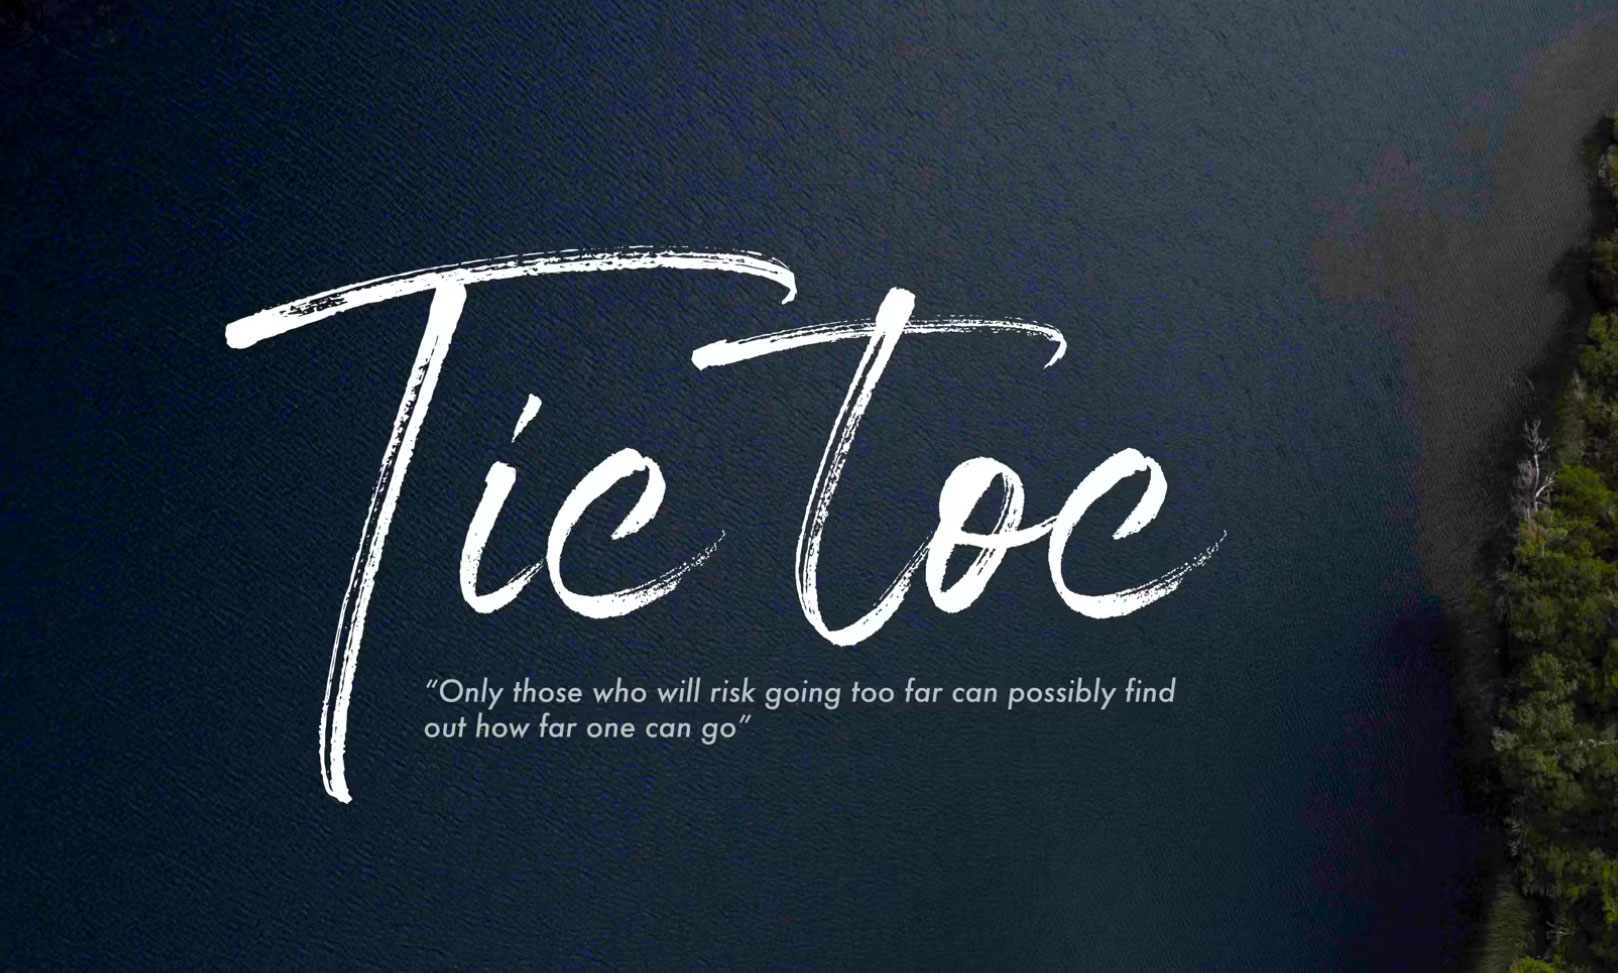 Short Film “Tic Toc”